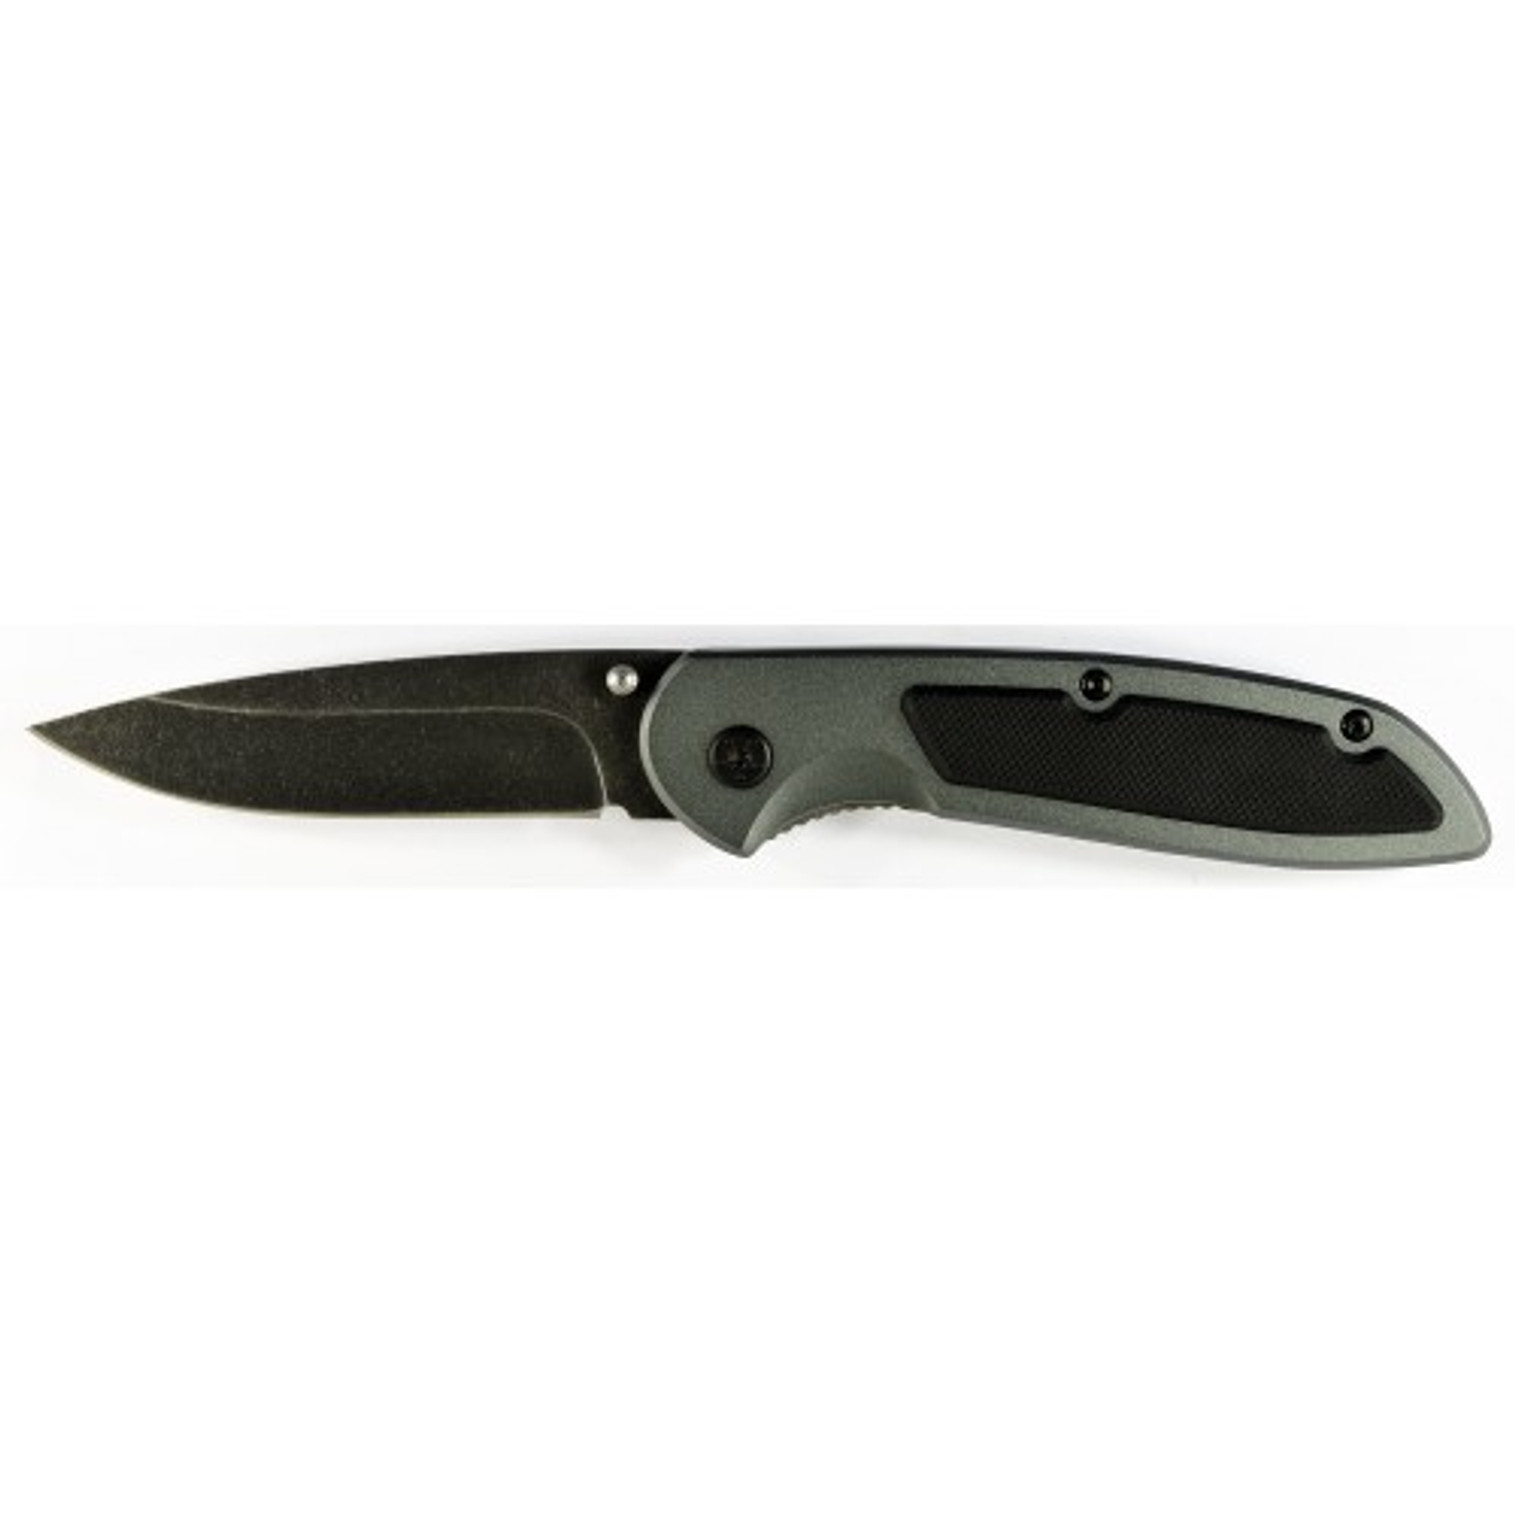 RUKO RUK0127, 440A, 3.25" Folding Blade Tactical Knife, Aluminum Handle w/ G10 Insert